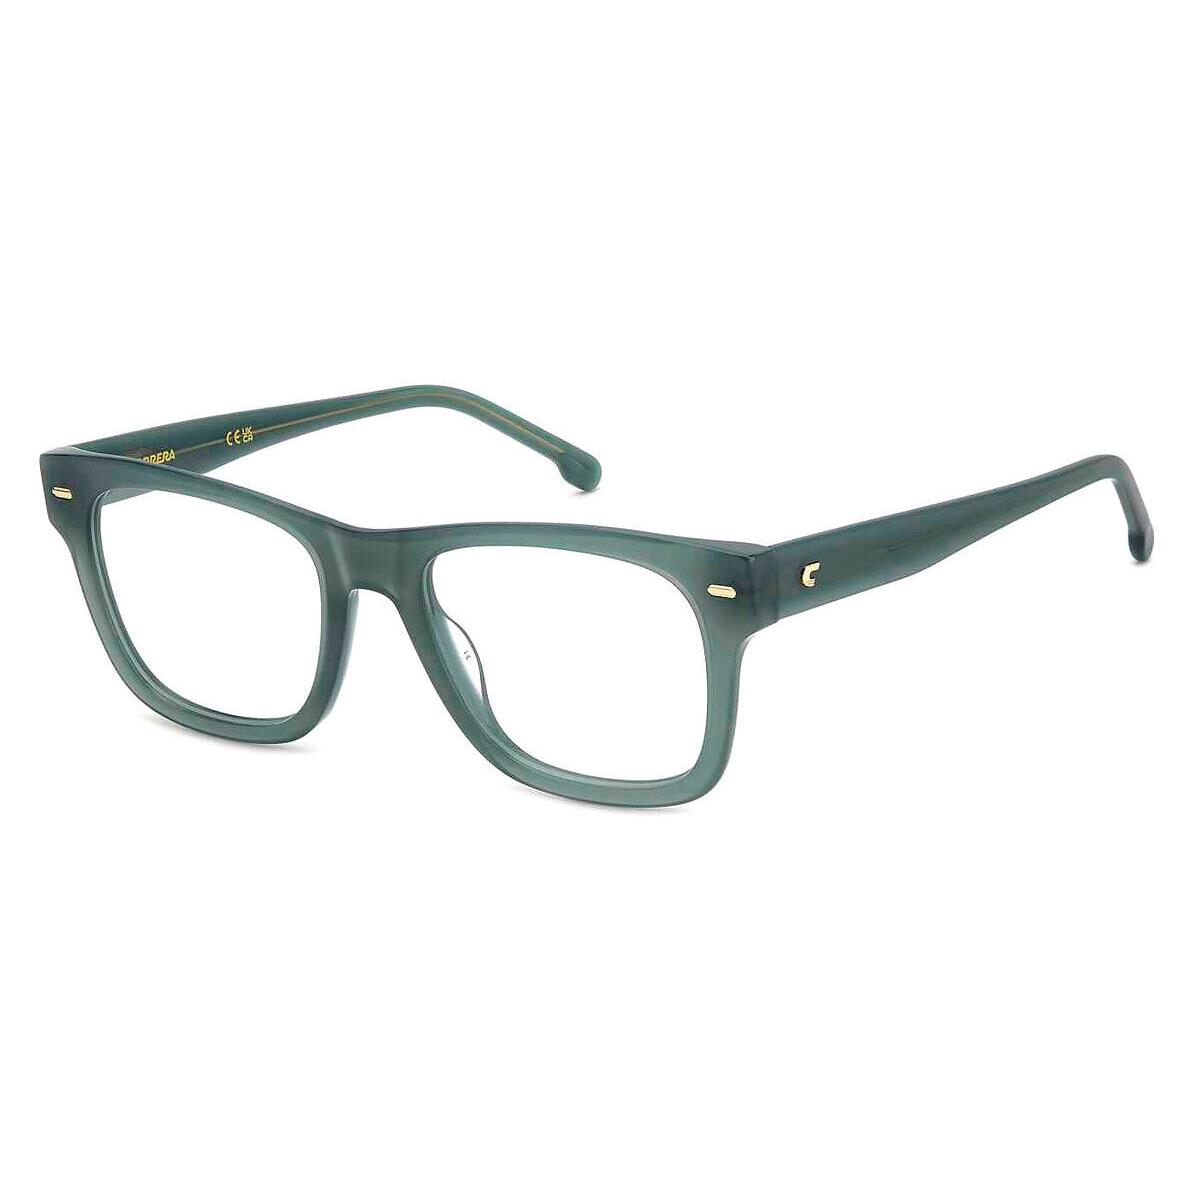 Carrera Car Eyeglasses Women Green 52mm